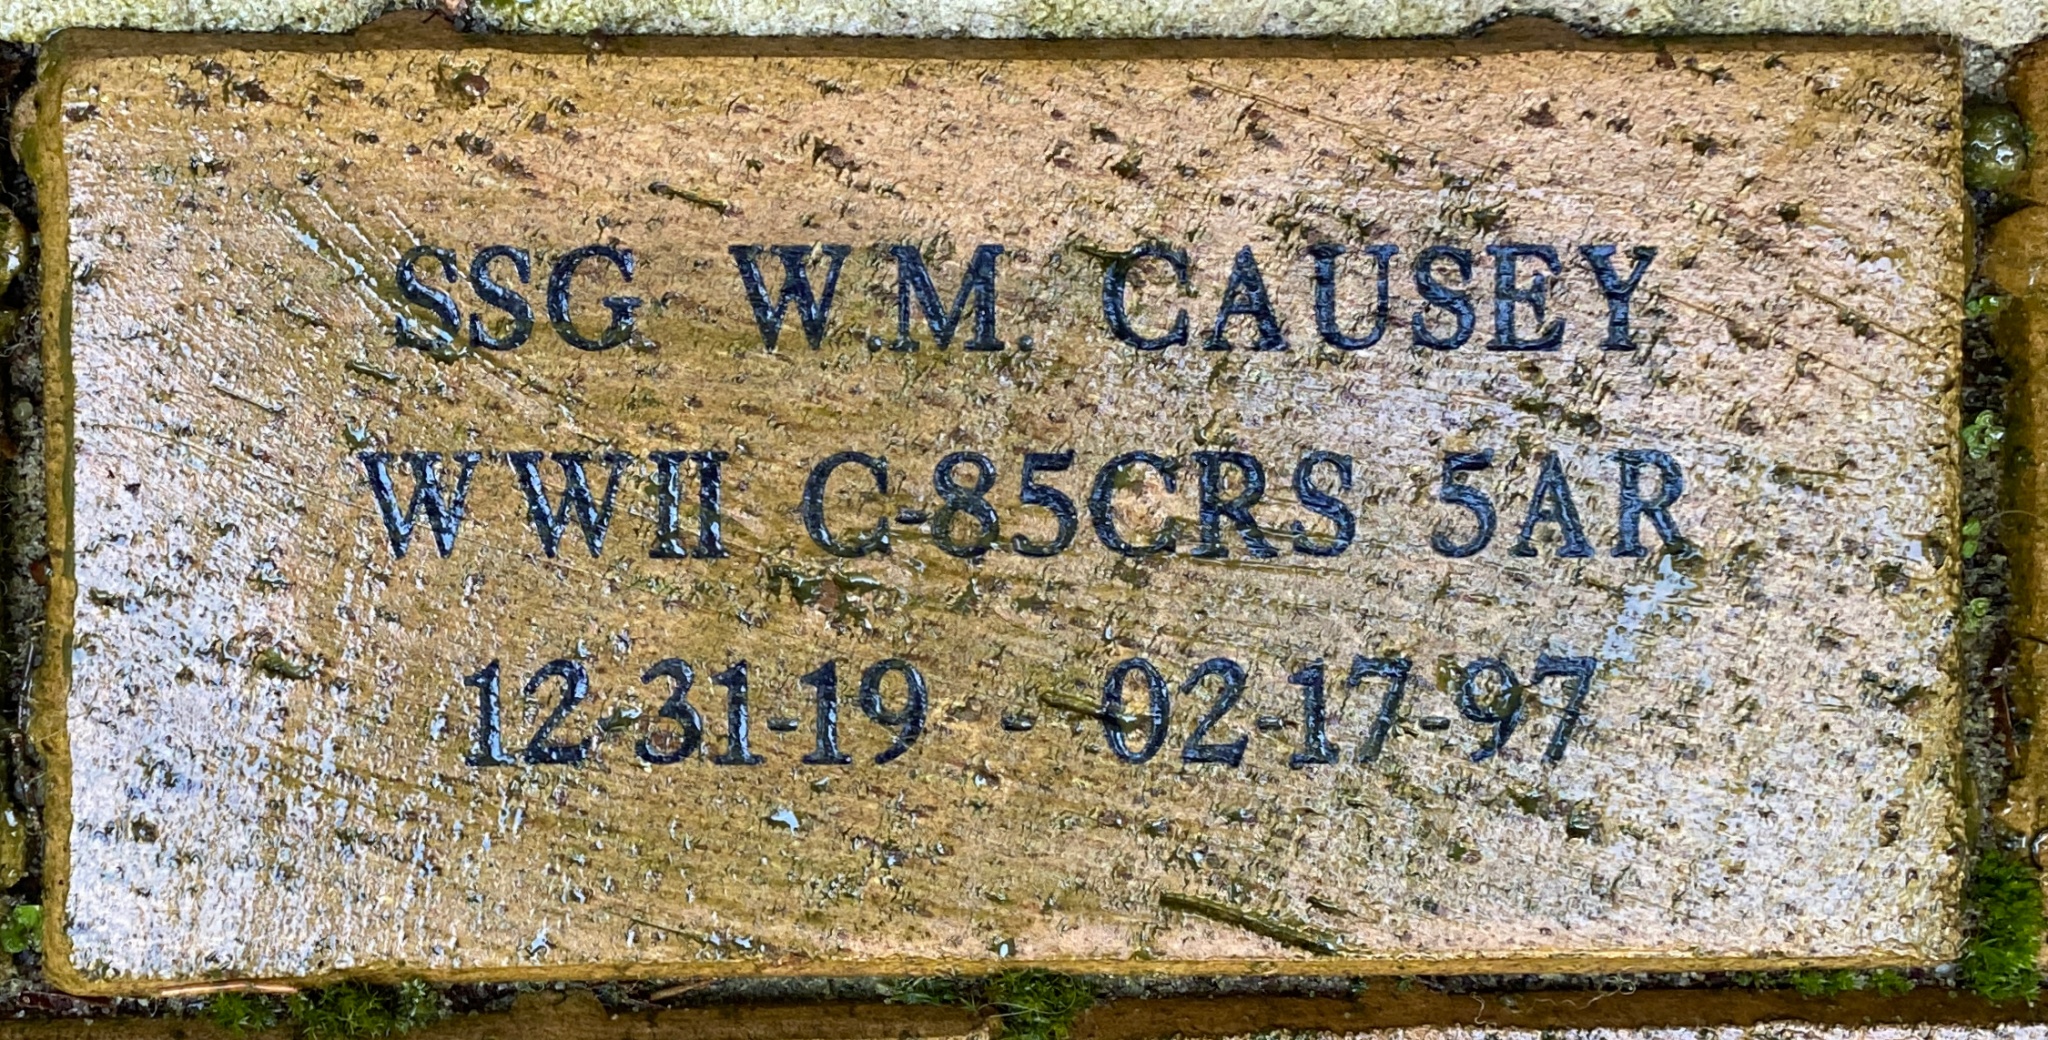 SSG W.M. CAUSEY WWII C-85CRS 5AR 12-31-19 – 02-17-97